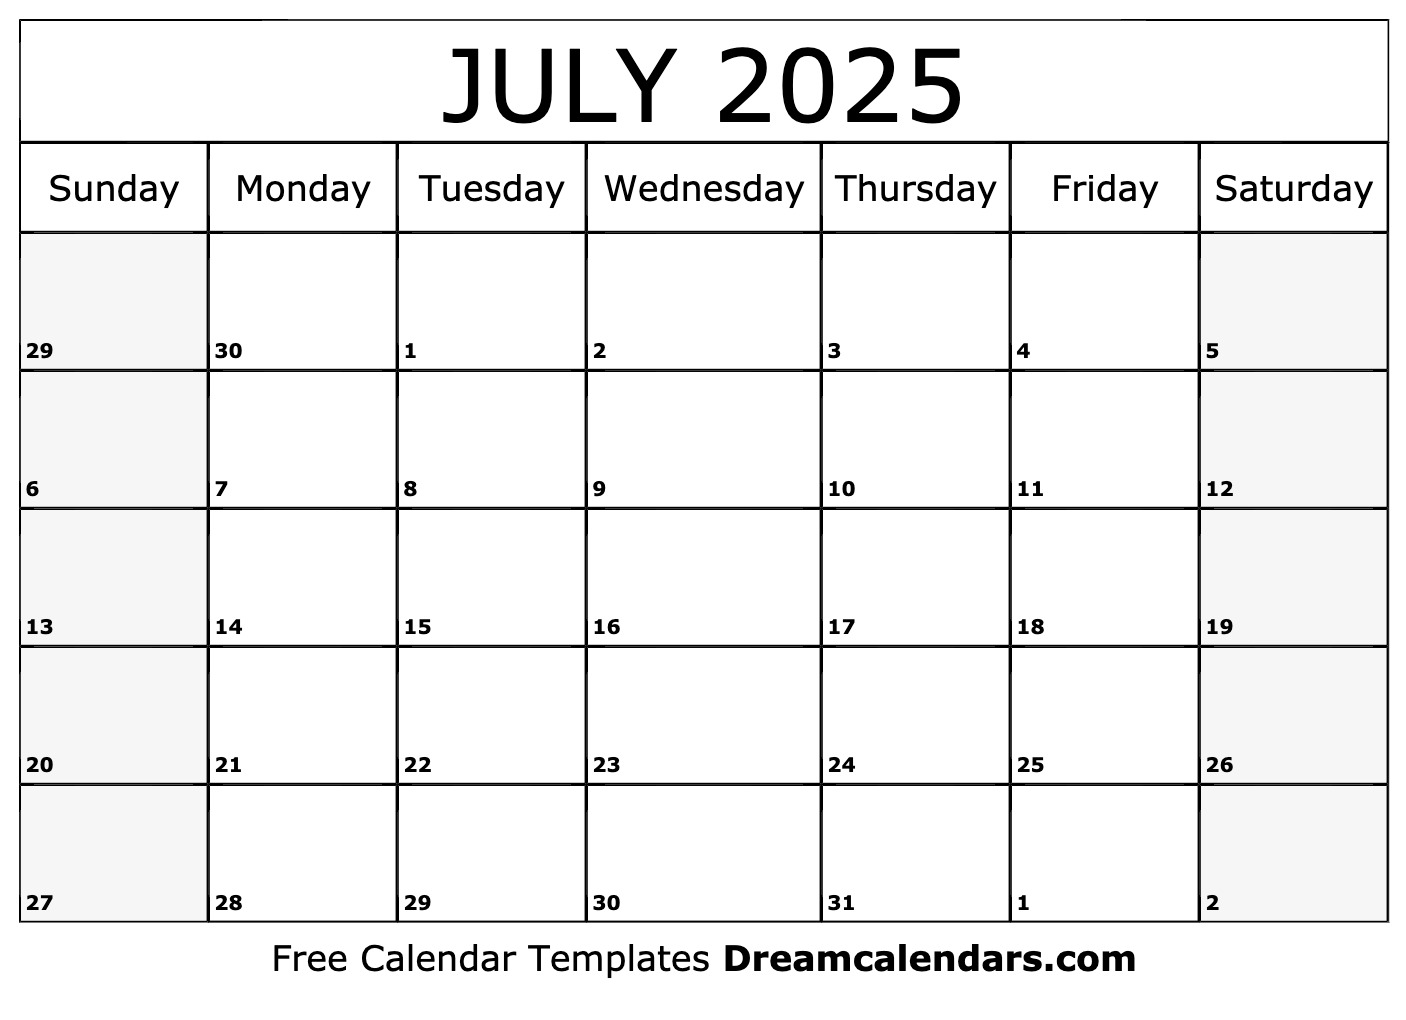 July 2025 Calendar Free Blank Printable With Holidays